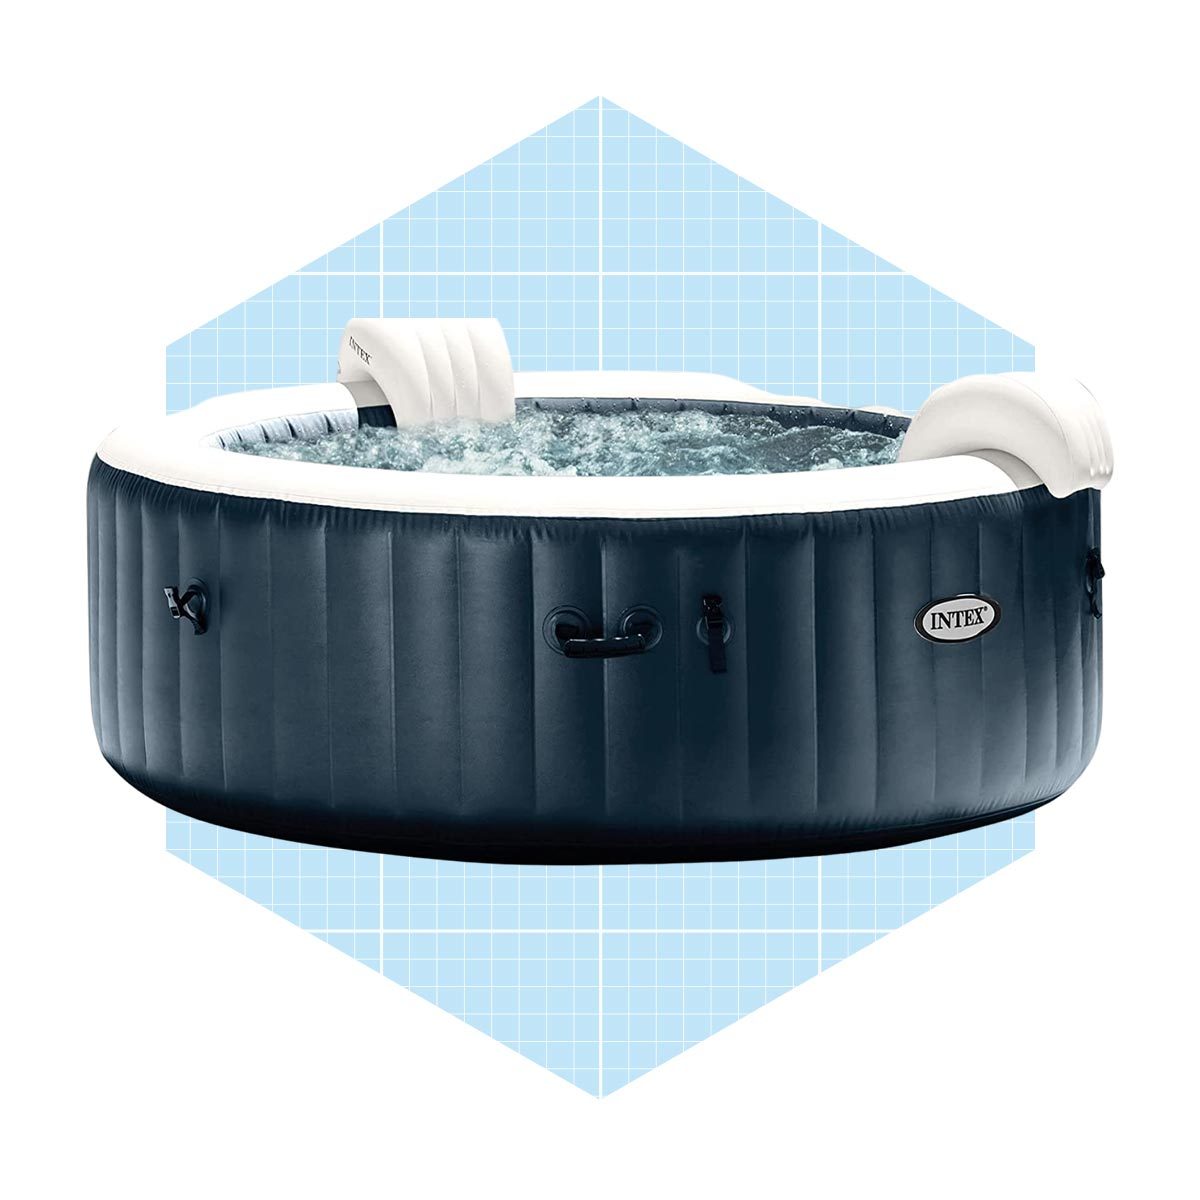 Intex Purespa Plus Inflatable Hot Tub